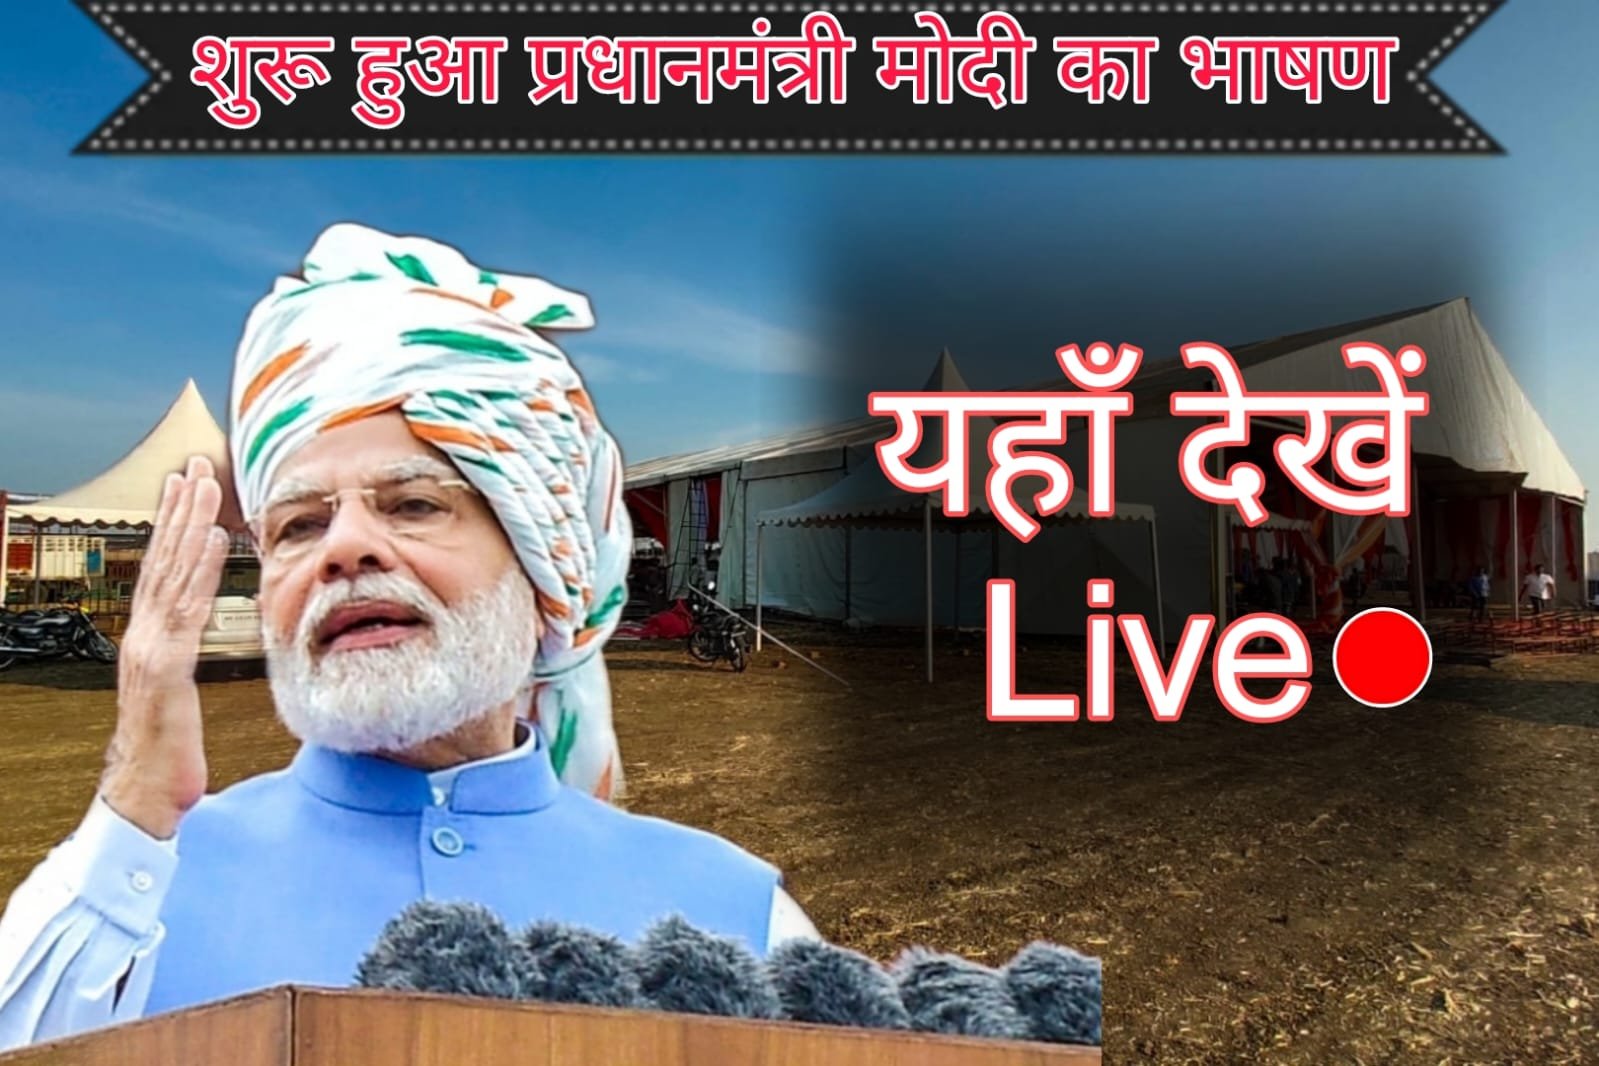 PM Modi Live - Prime Minister Modi's speech begins, watch live here